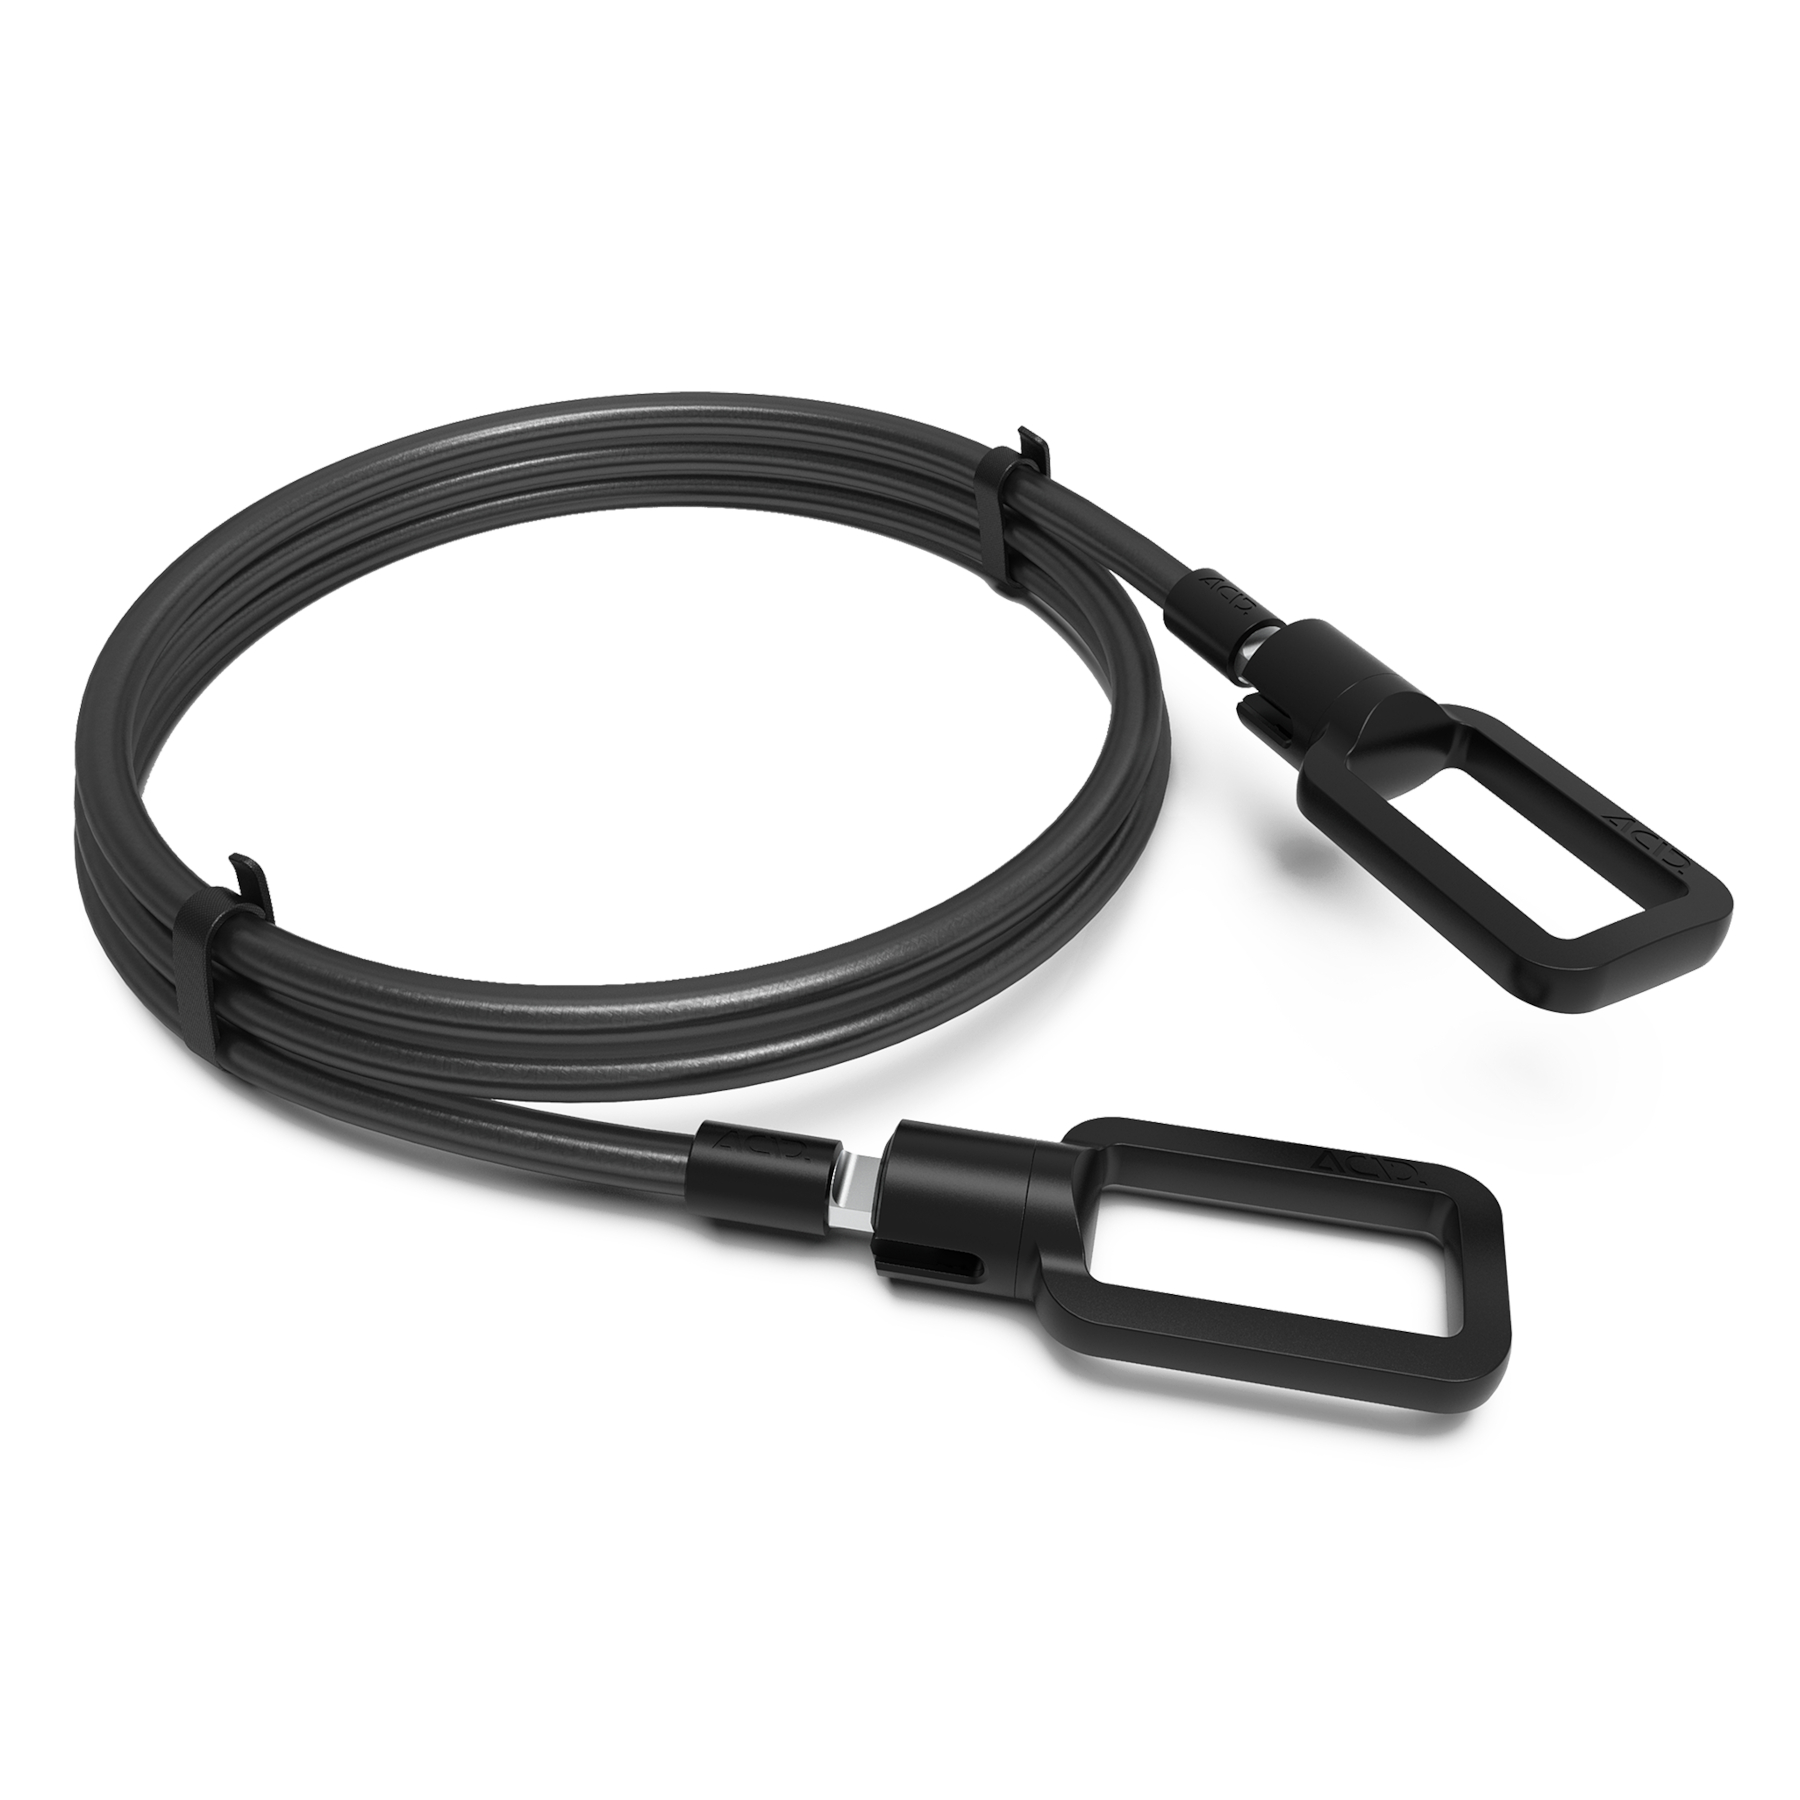 Productfoto van CUBE ACID PRO Loop Cable Extension - 250 cm